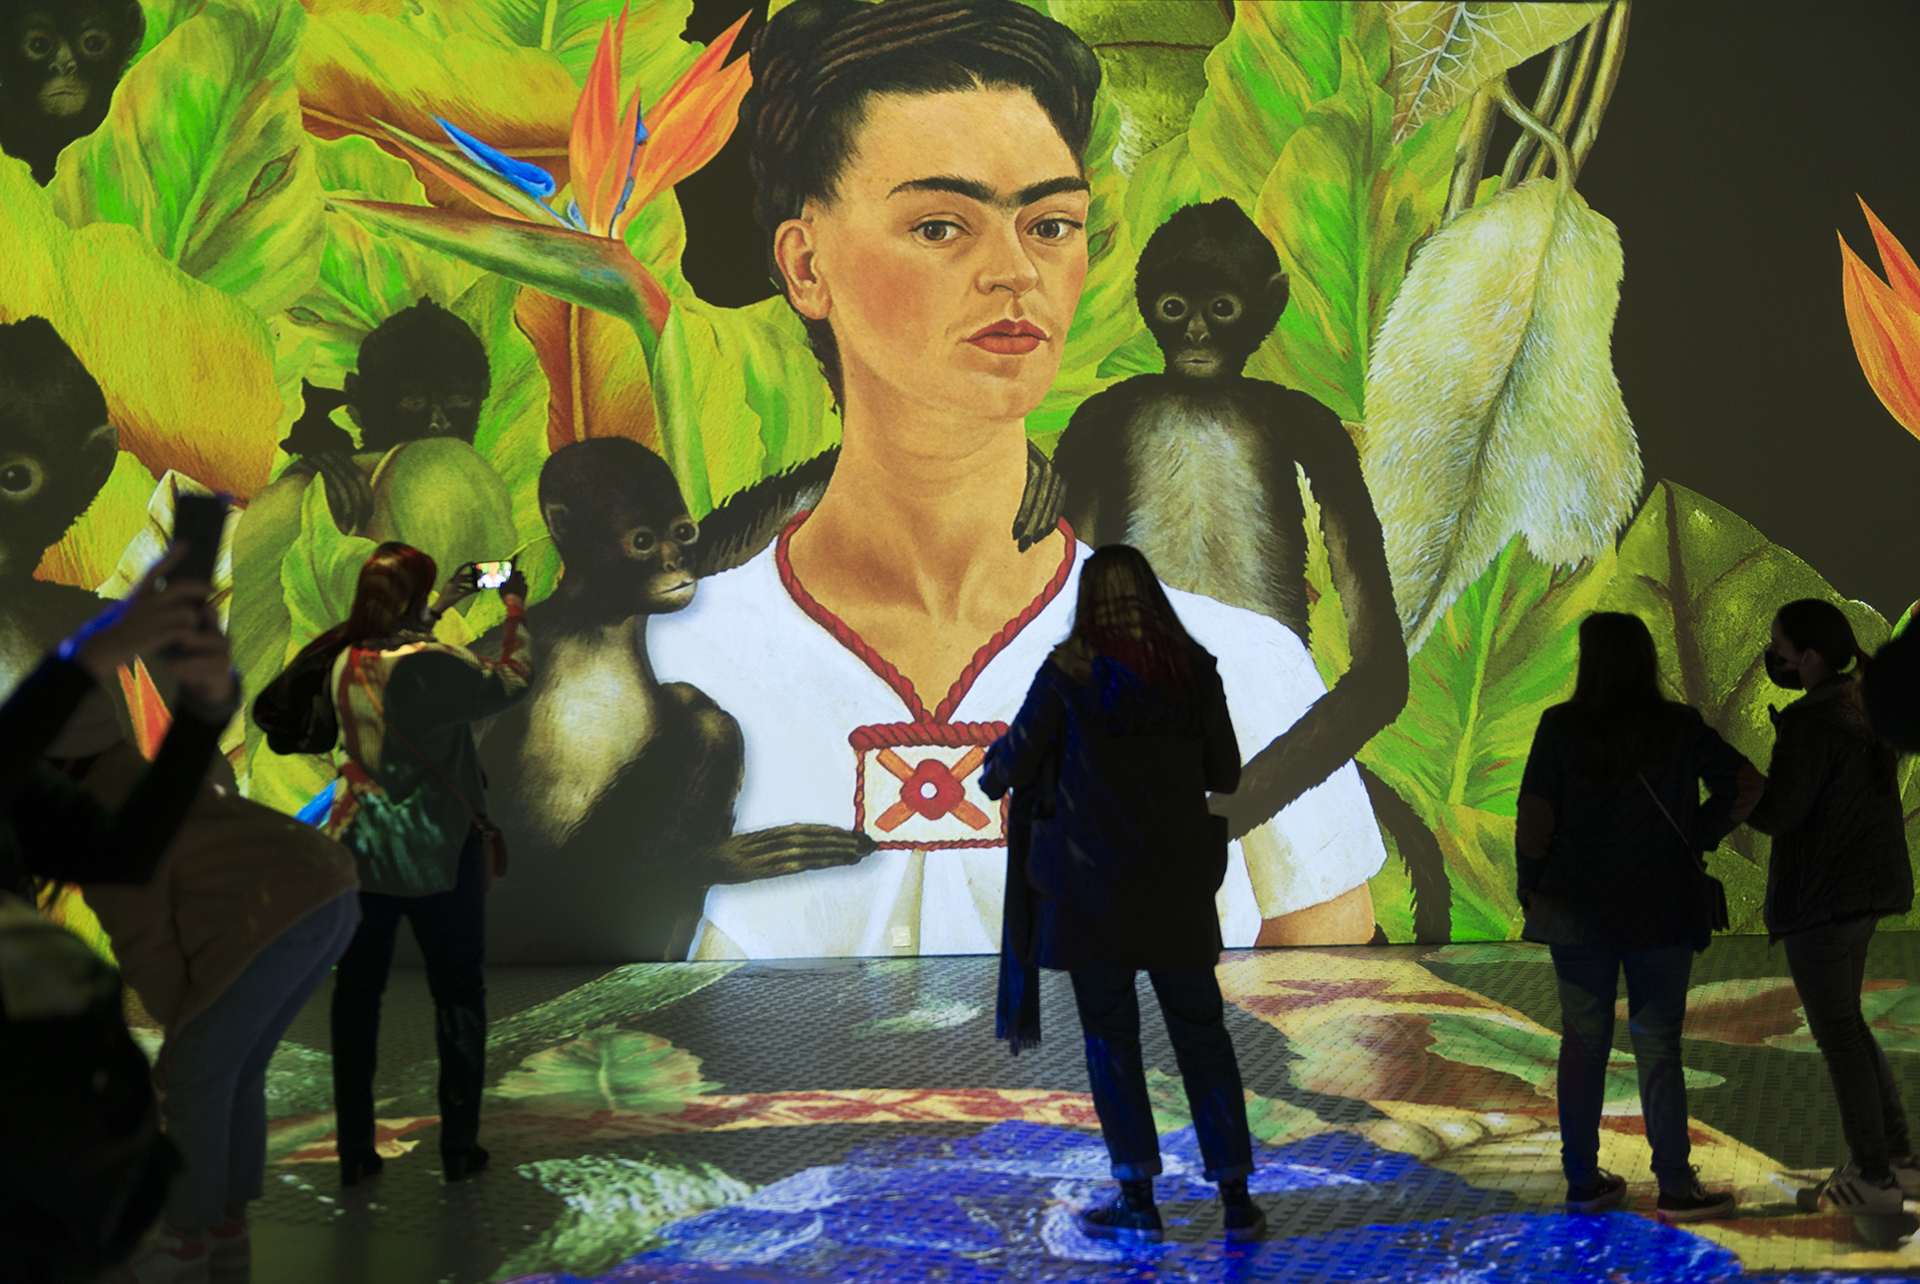 Vida y obra de Frida Kahlo” llega a Buenos Aires - Infobae